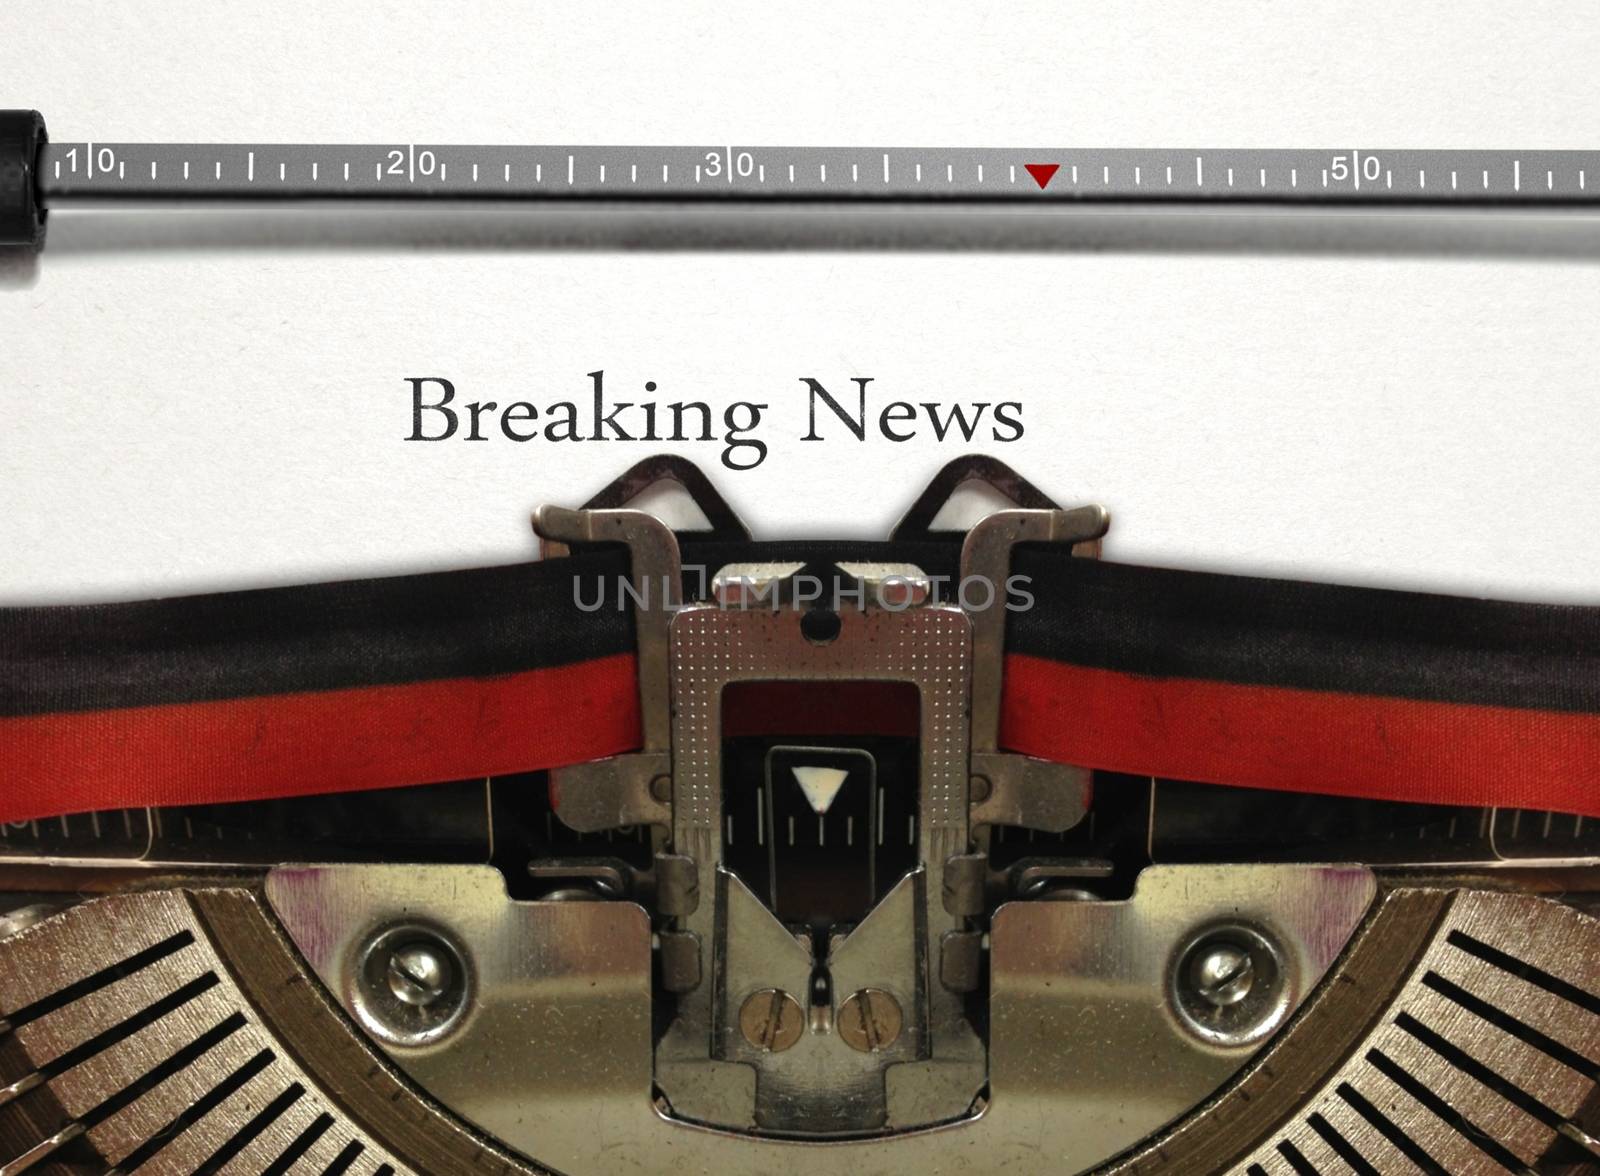 Typewriter with Breaking News